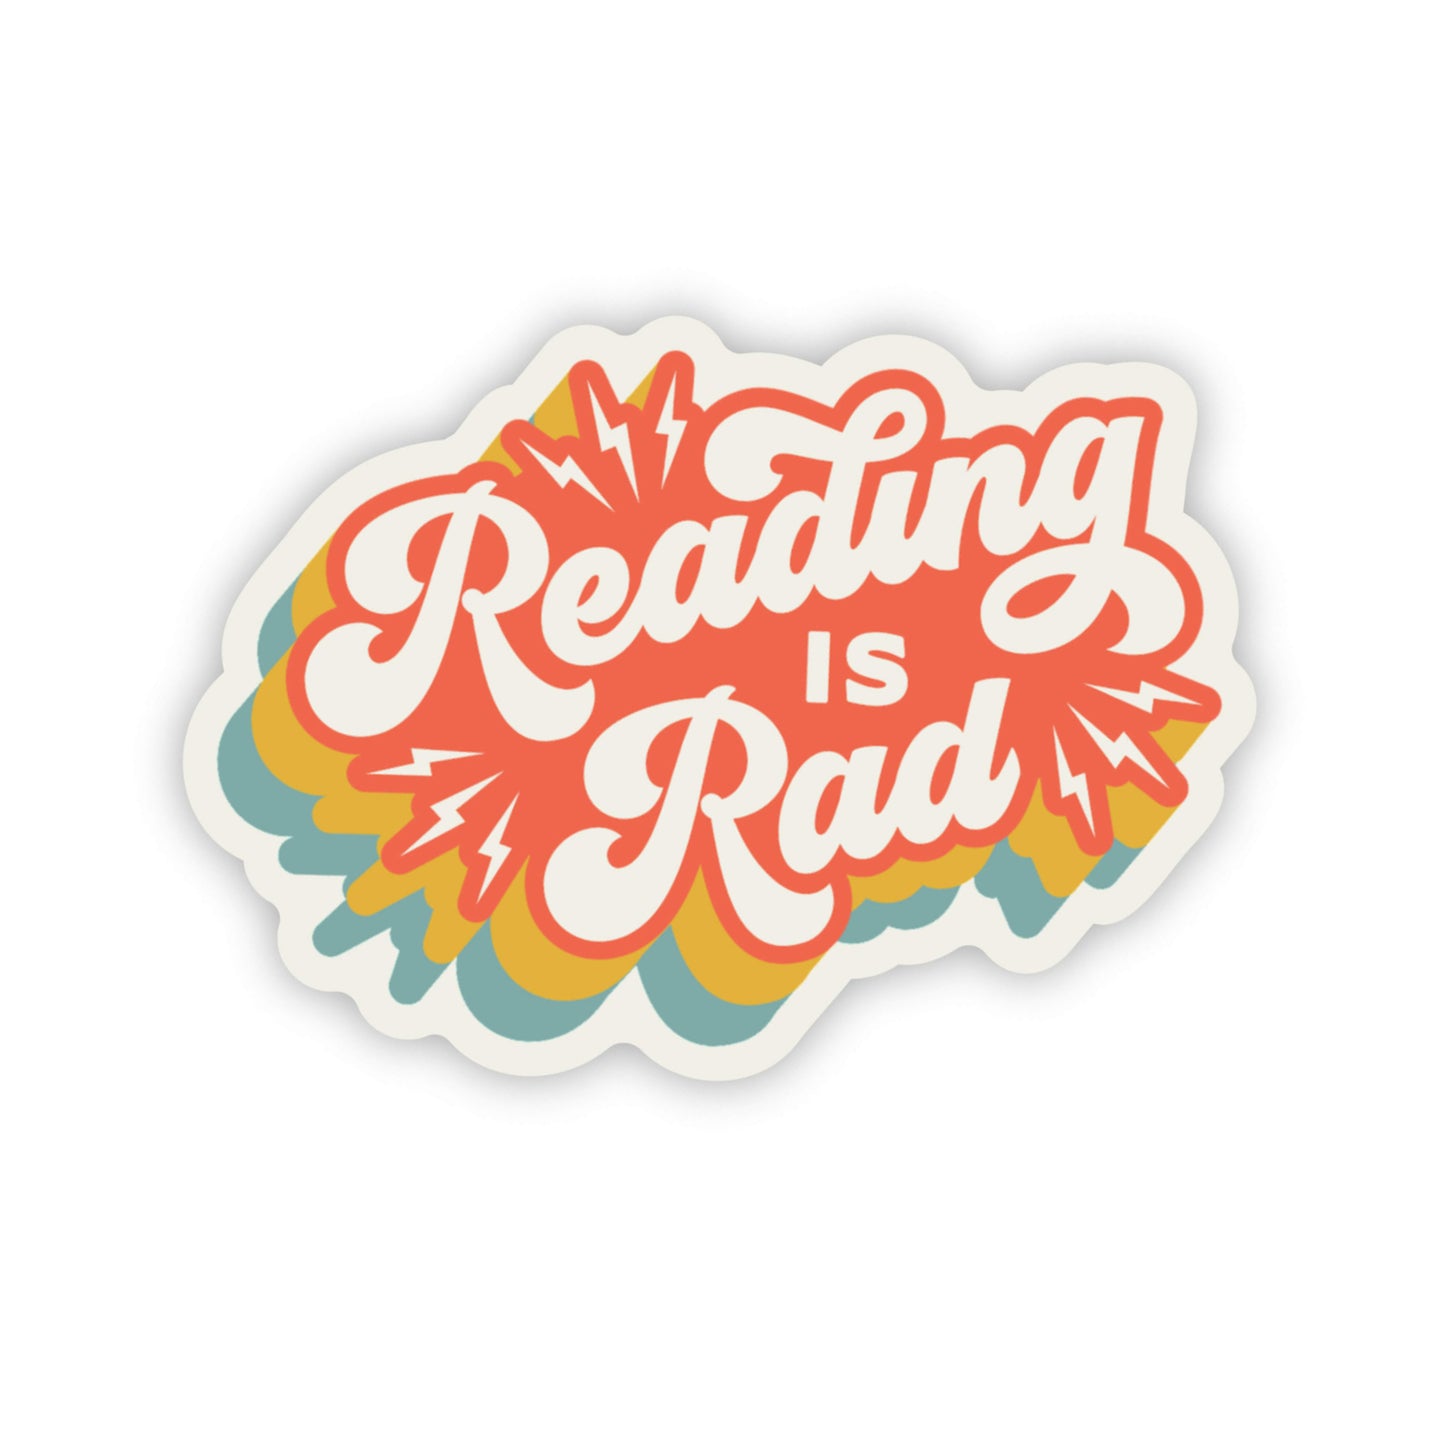 Reading is Rad Sticker